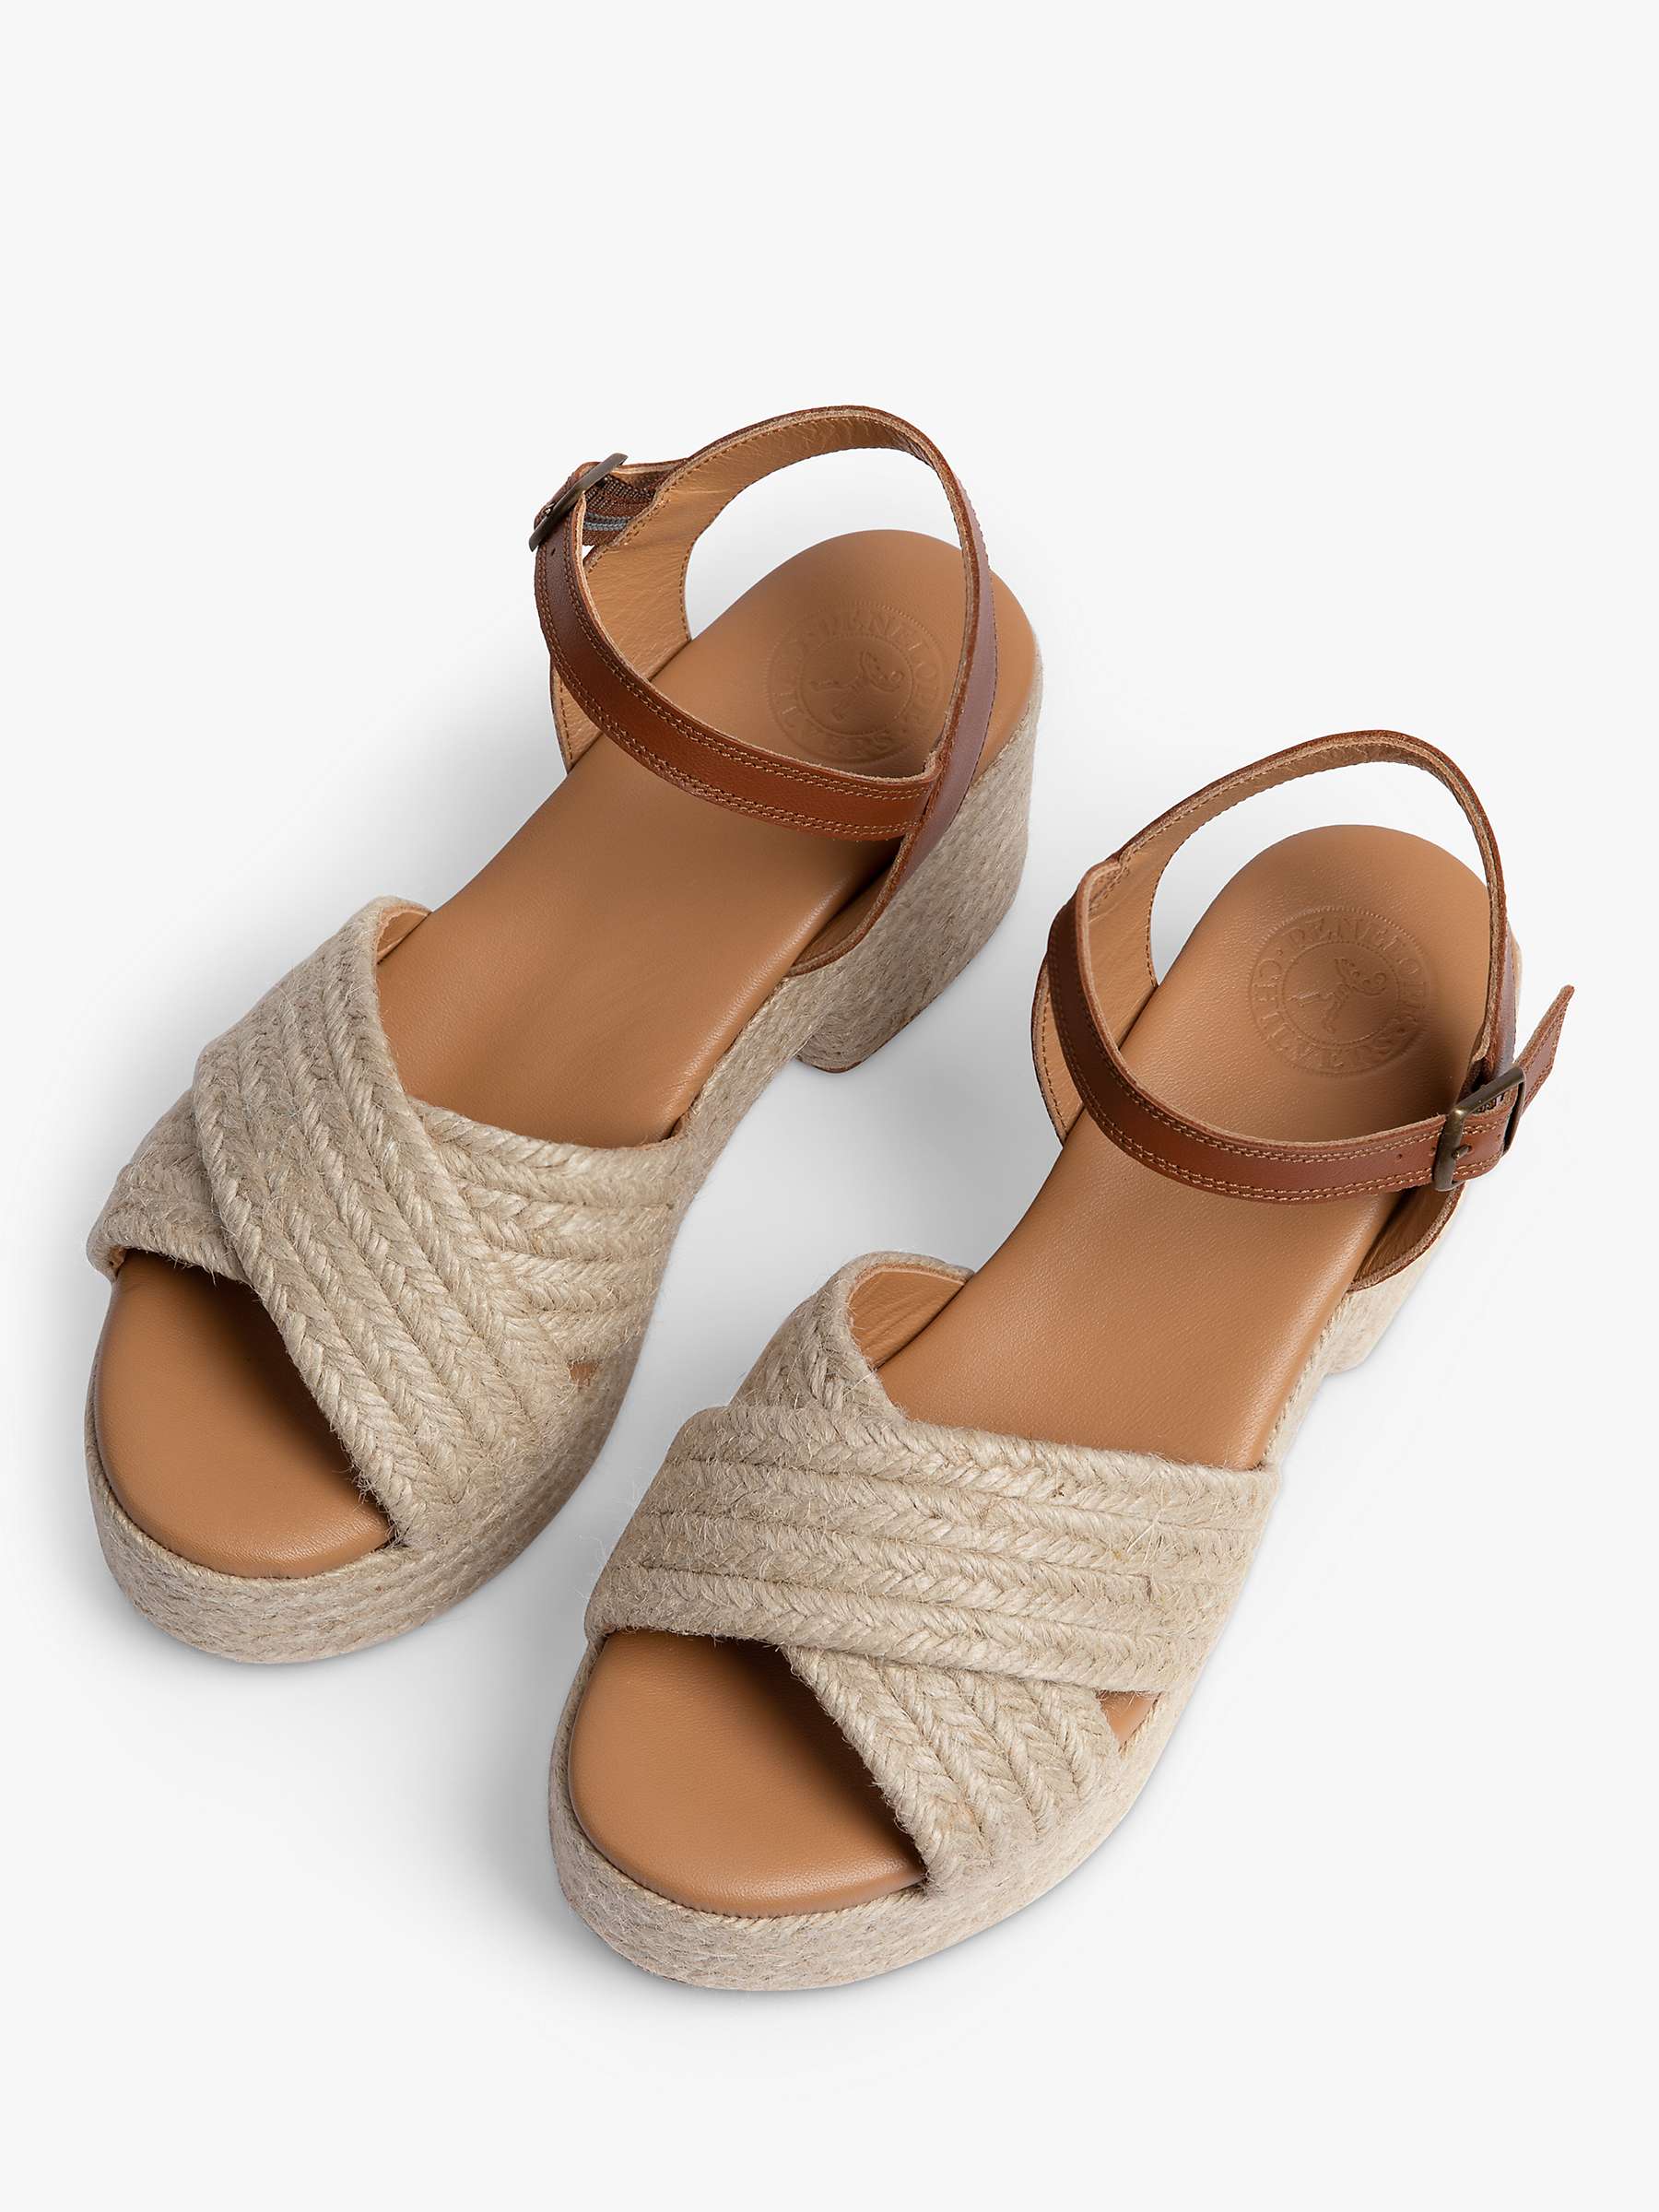 Buy Penelope Chilvers Bella Jute Espadrille Sandals, Tan Online at johnlewis.com